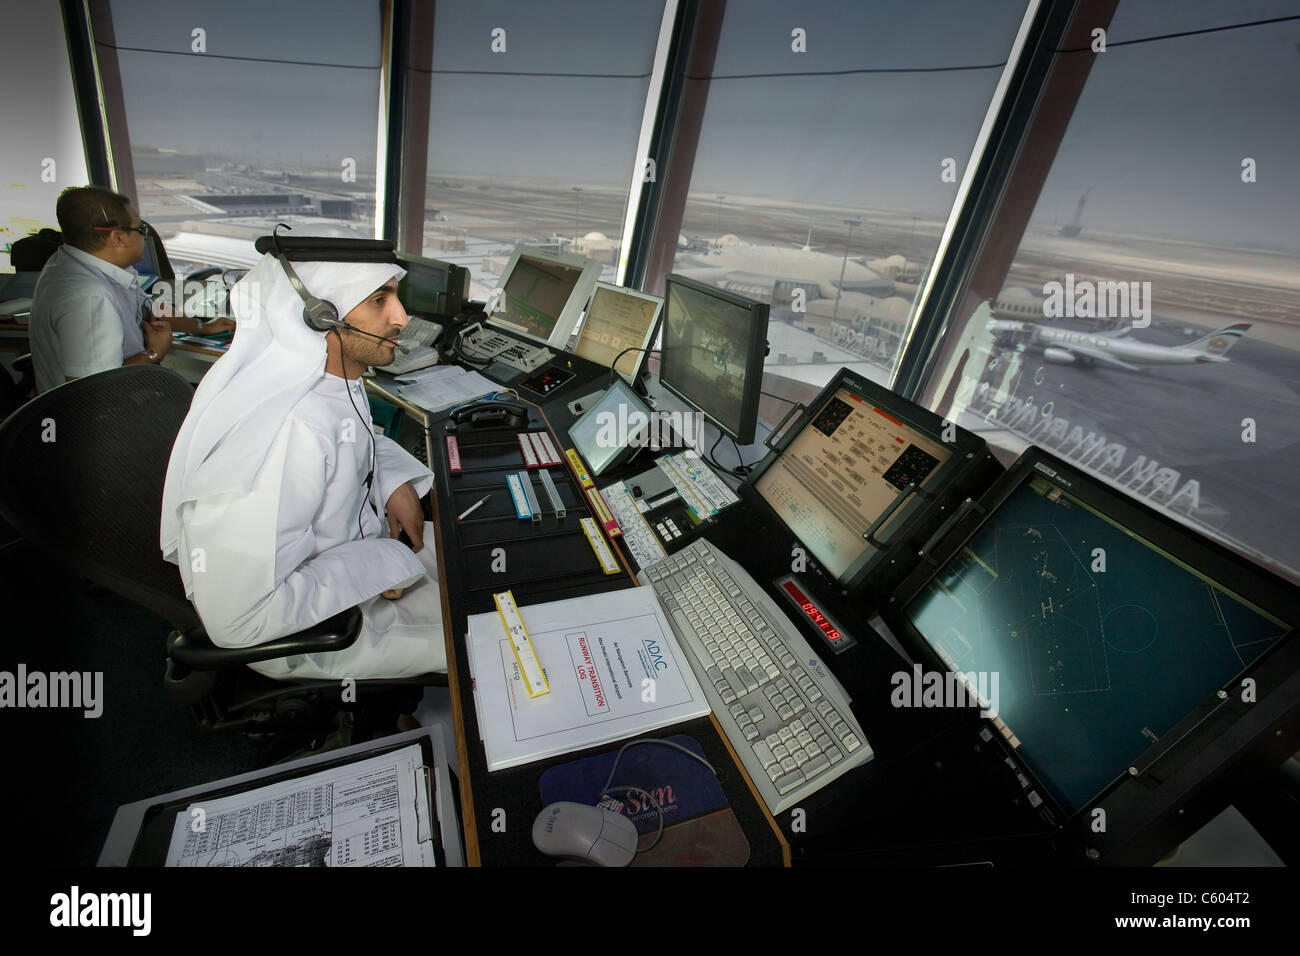 Abu Dhabi Airport Control Tower Stock Photo